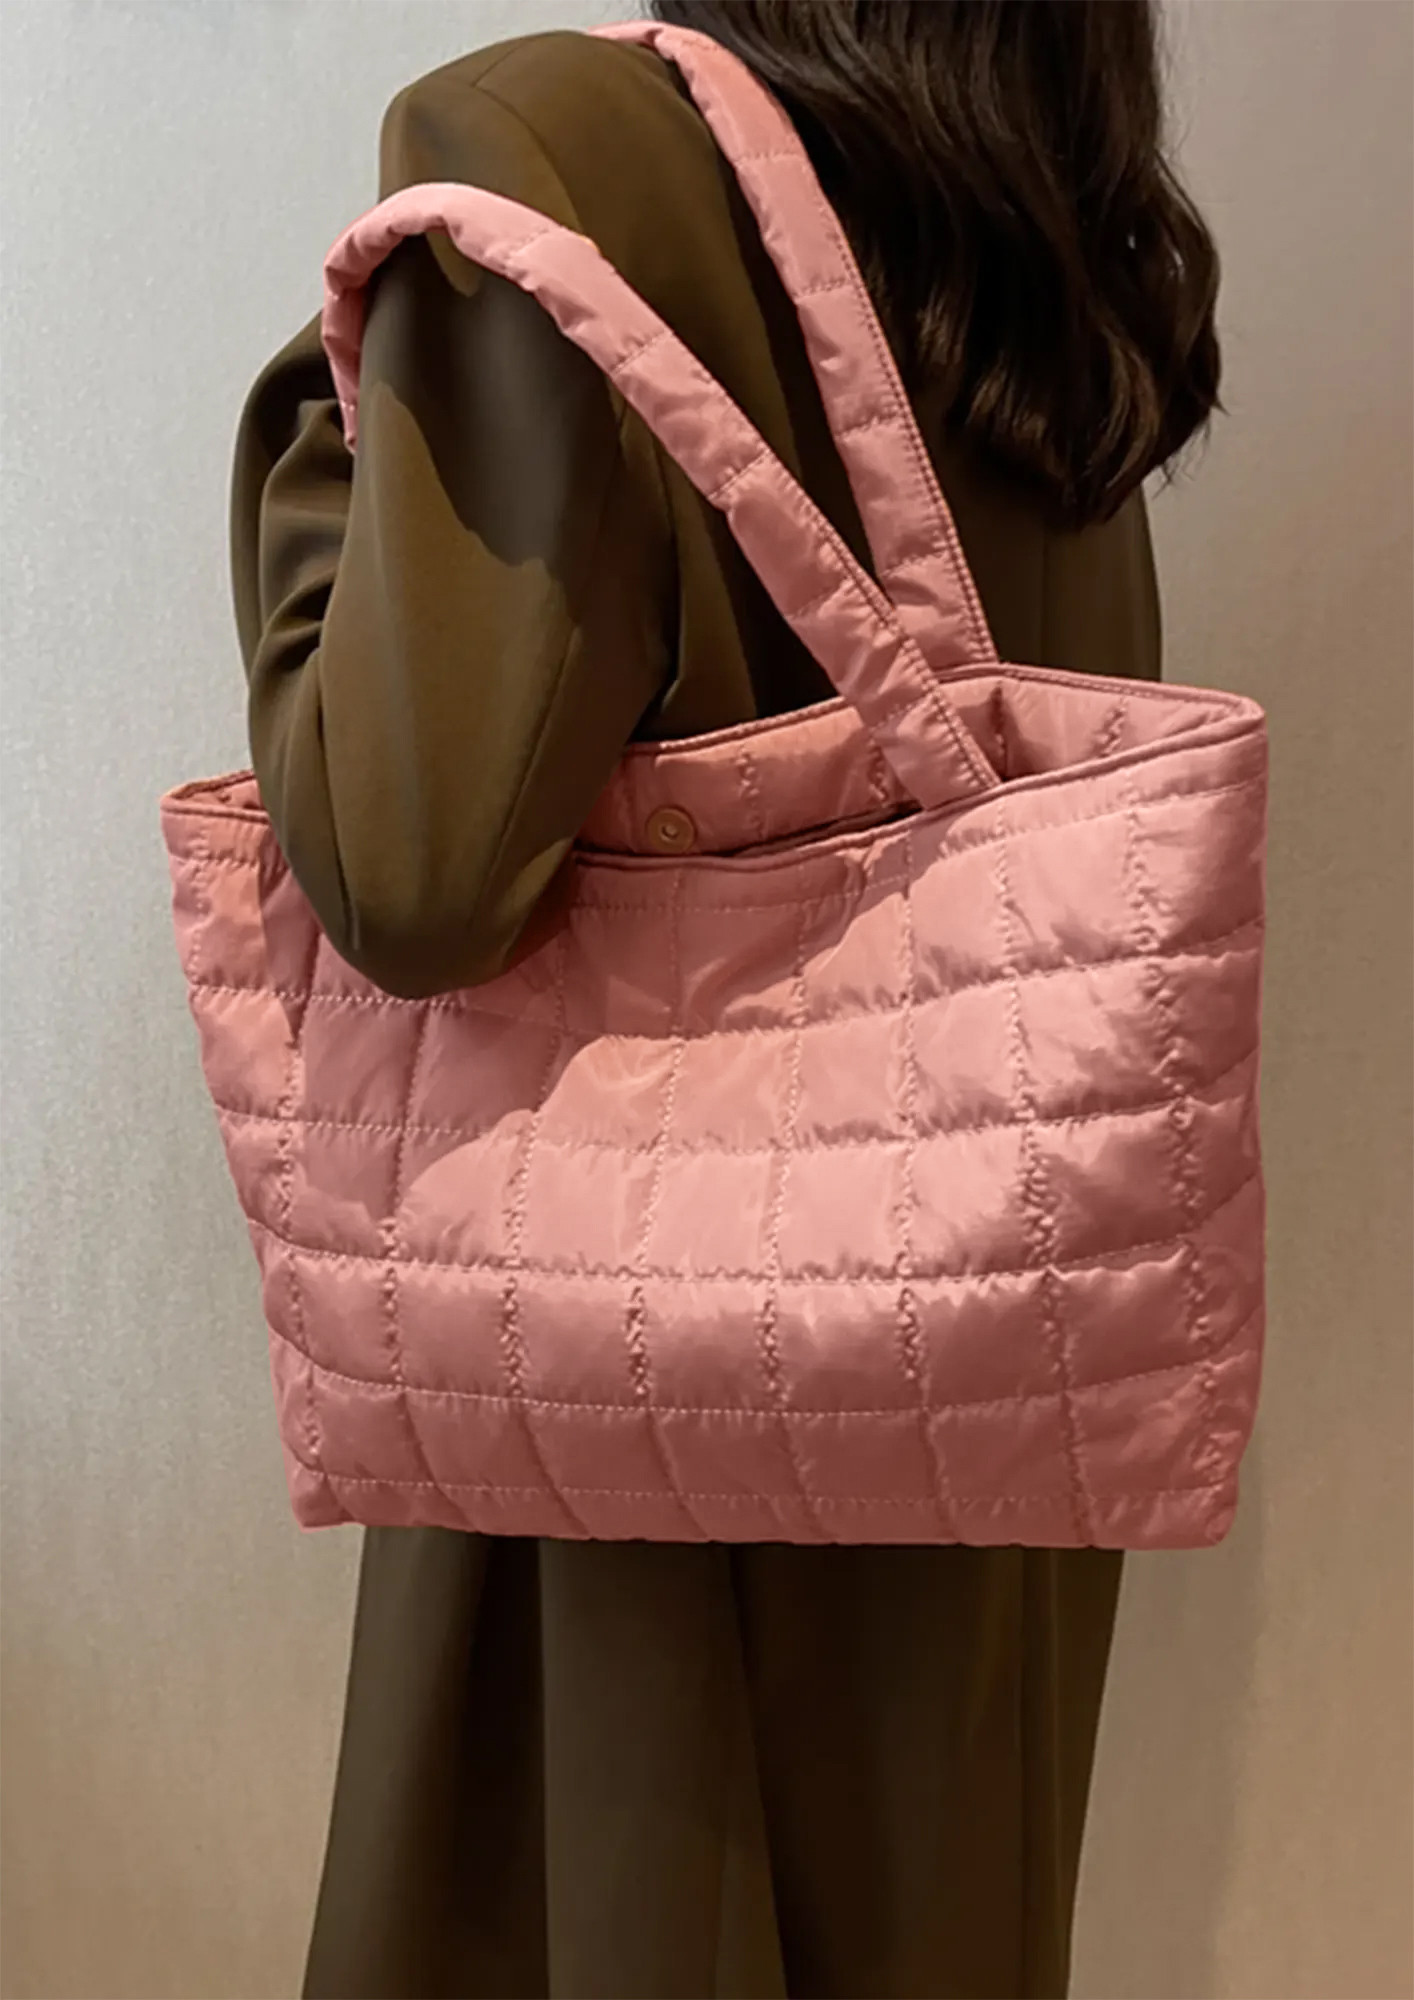 2020 Latest Fashion Girls Handbag Cute| Alibaba.com